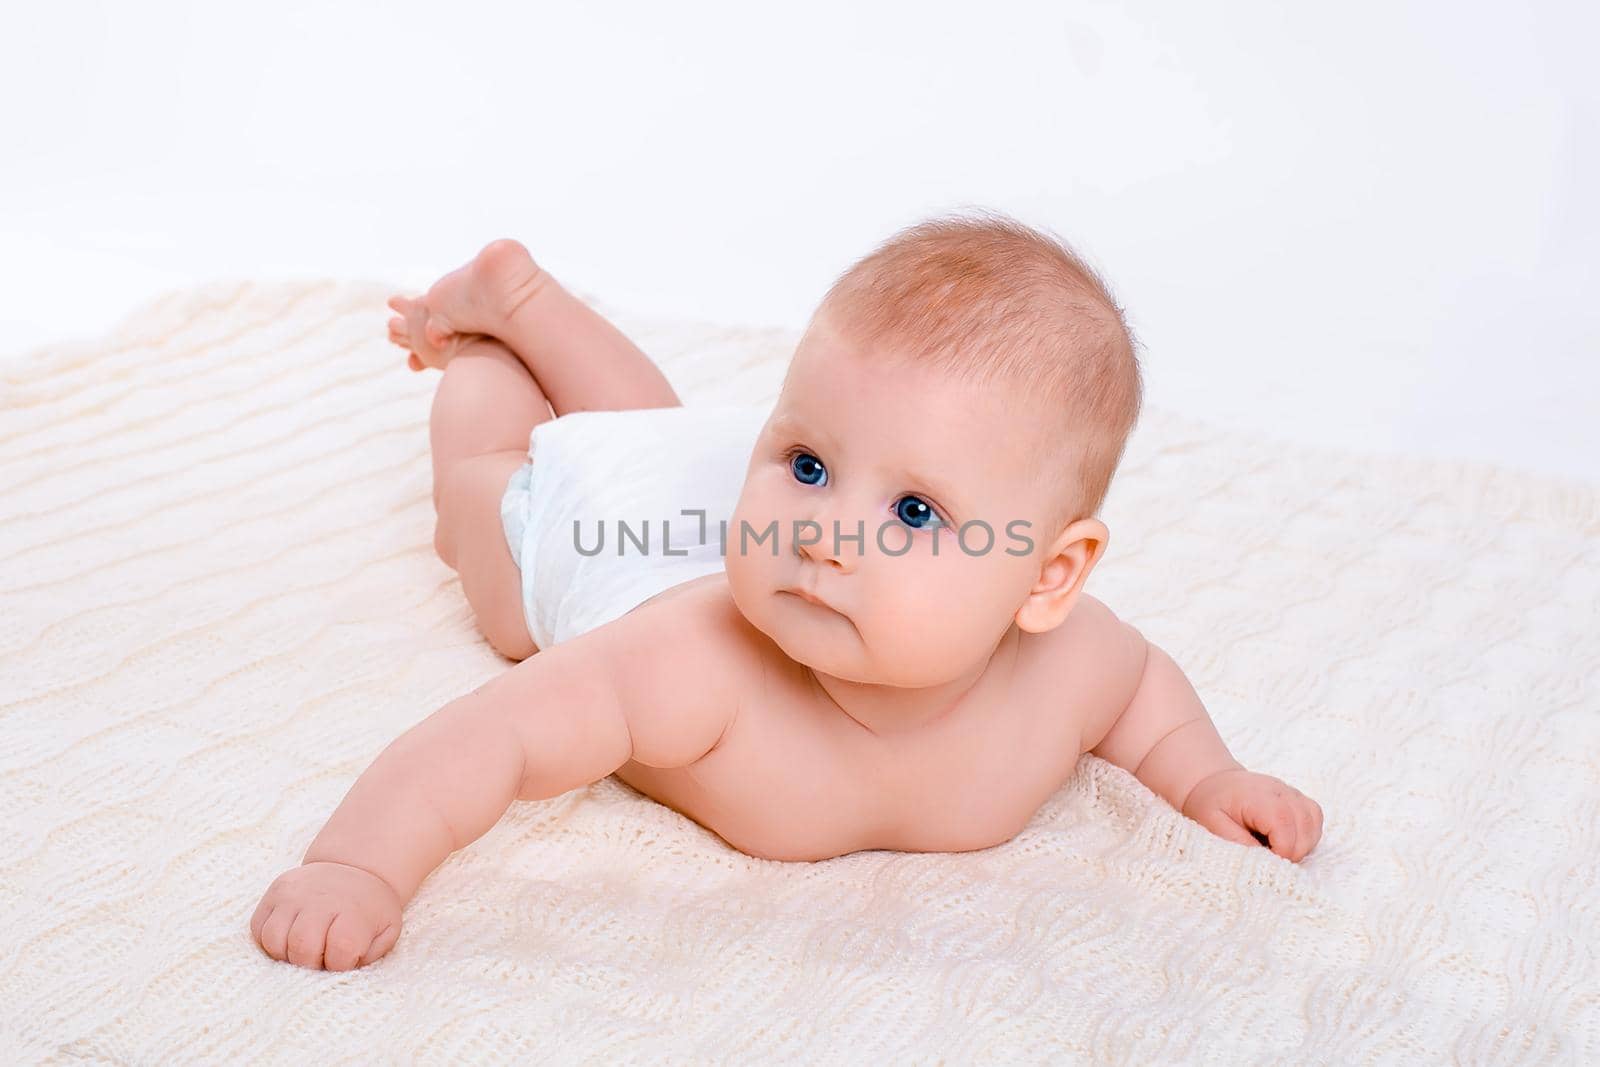 Cute baby girl on white background with isolation by nazarovsergey